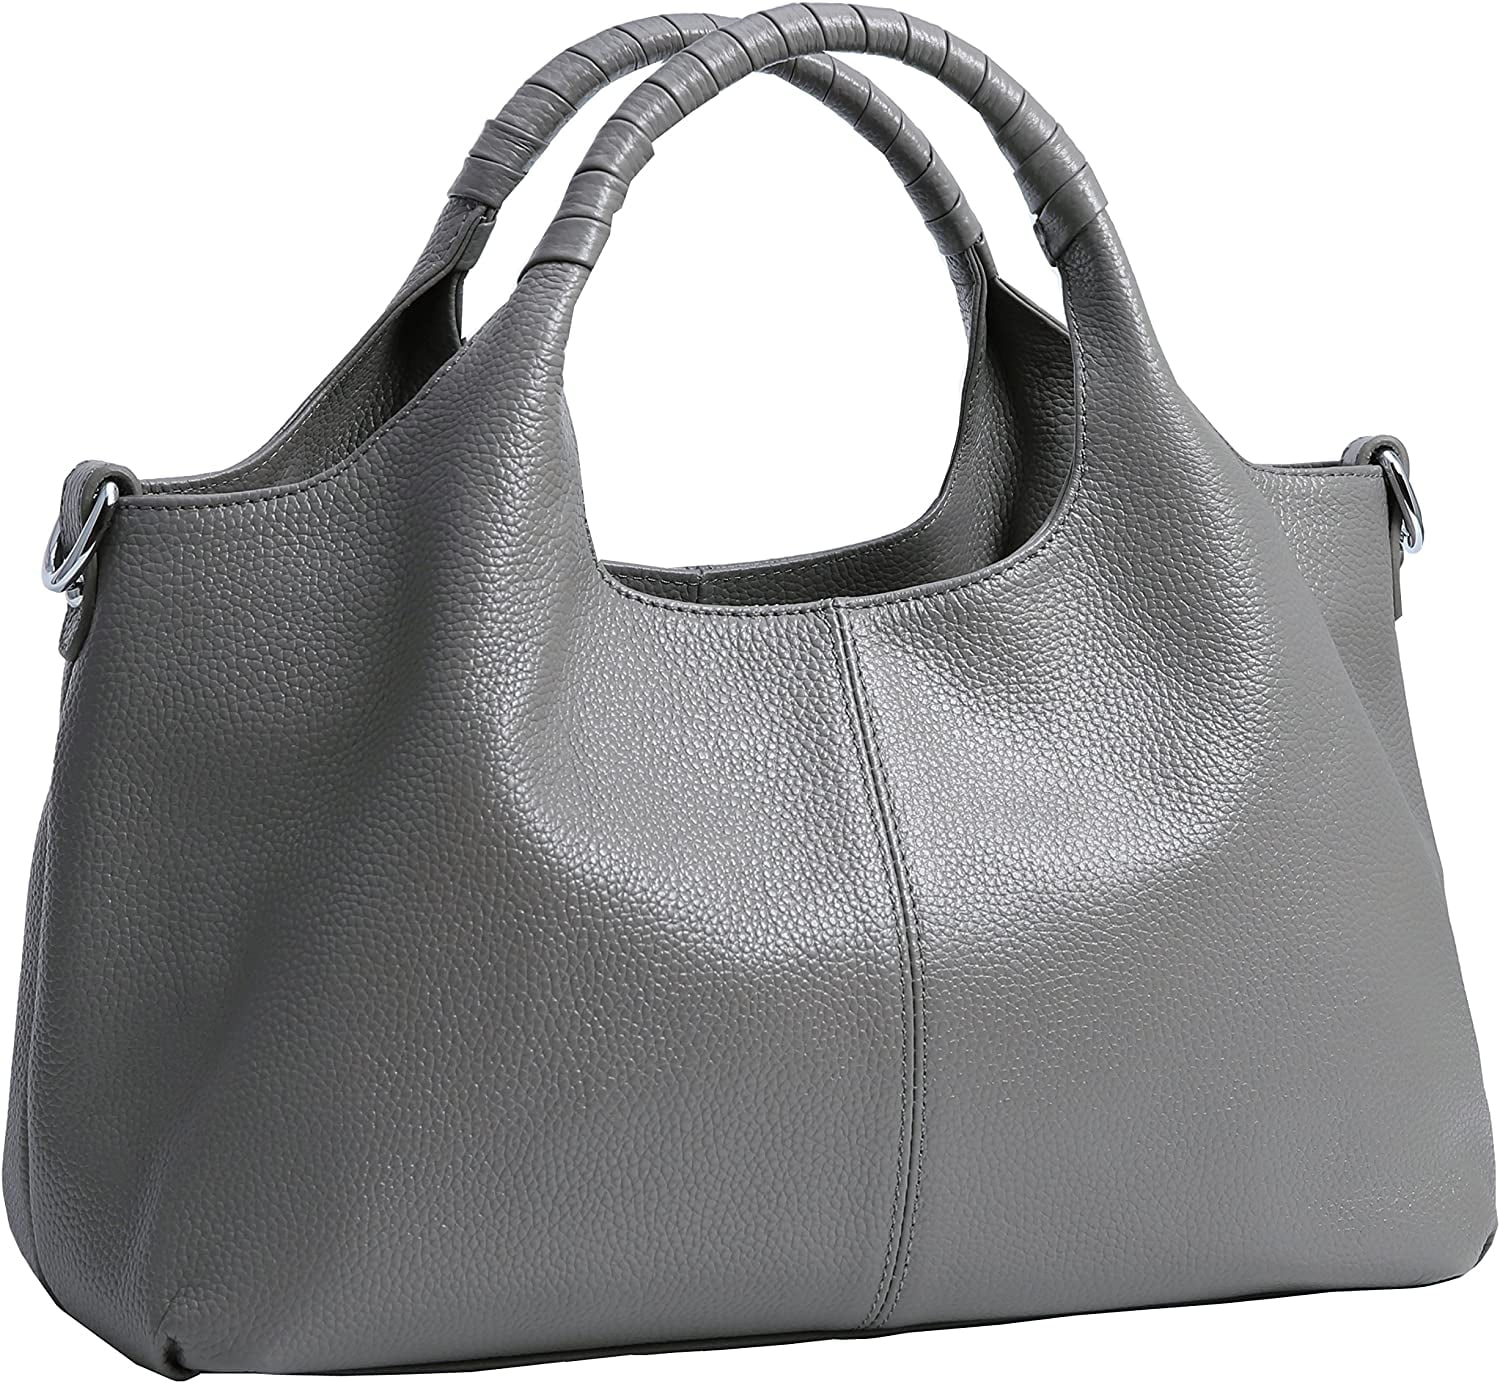 Colisha Black Handbag Women Big Capacity Hobo Top-handle Tote Soft Faux  Leather Braided Shoulder Bag Oversized Slouchy Purse - Large Size